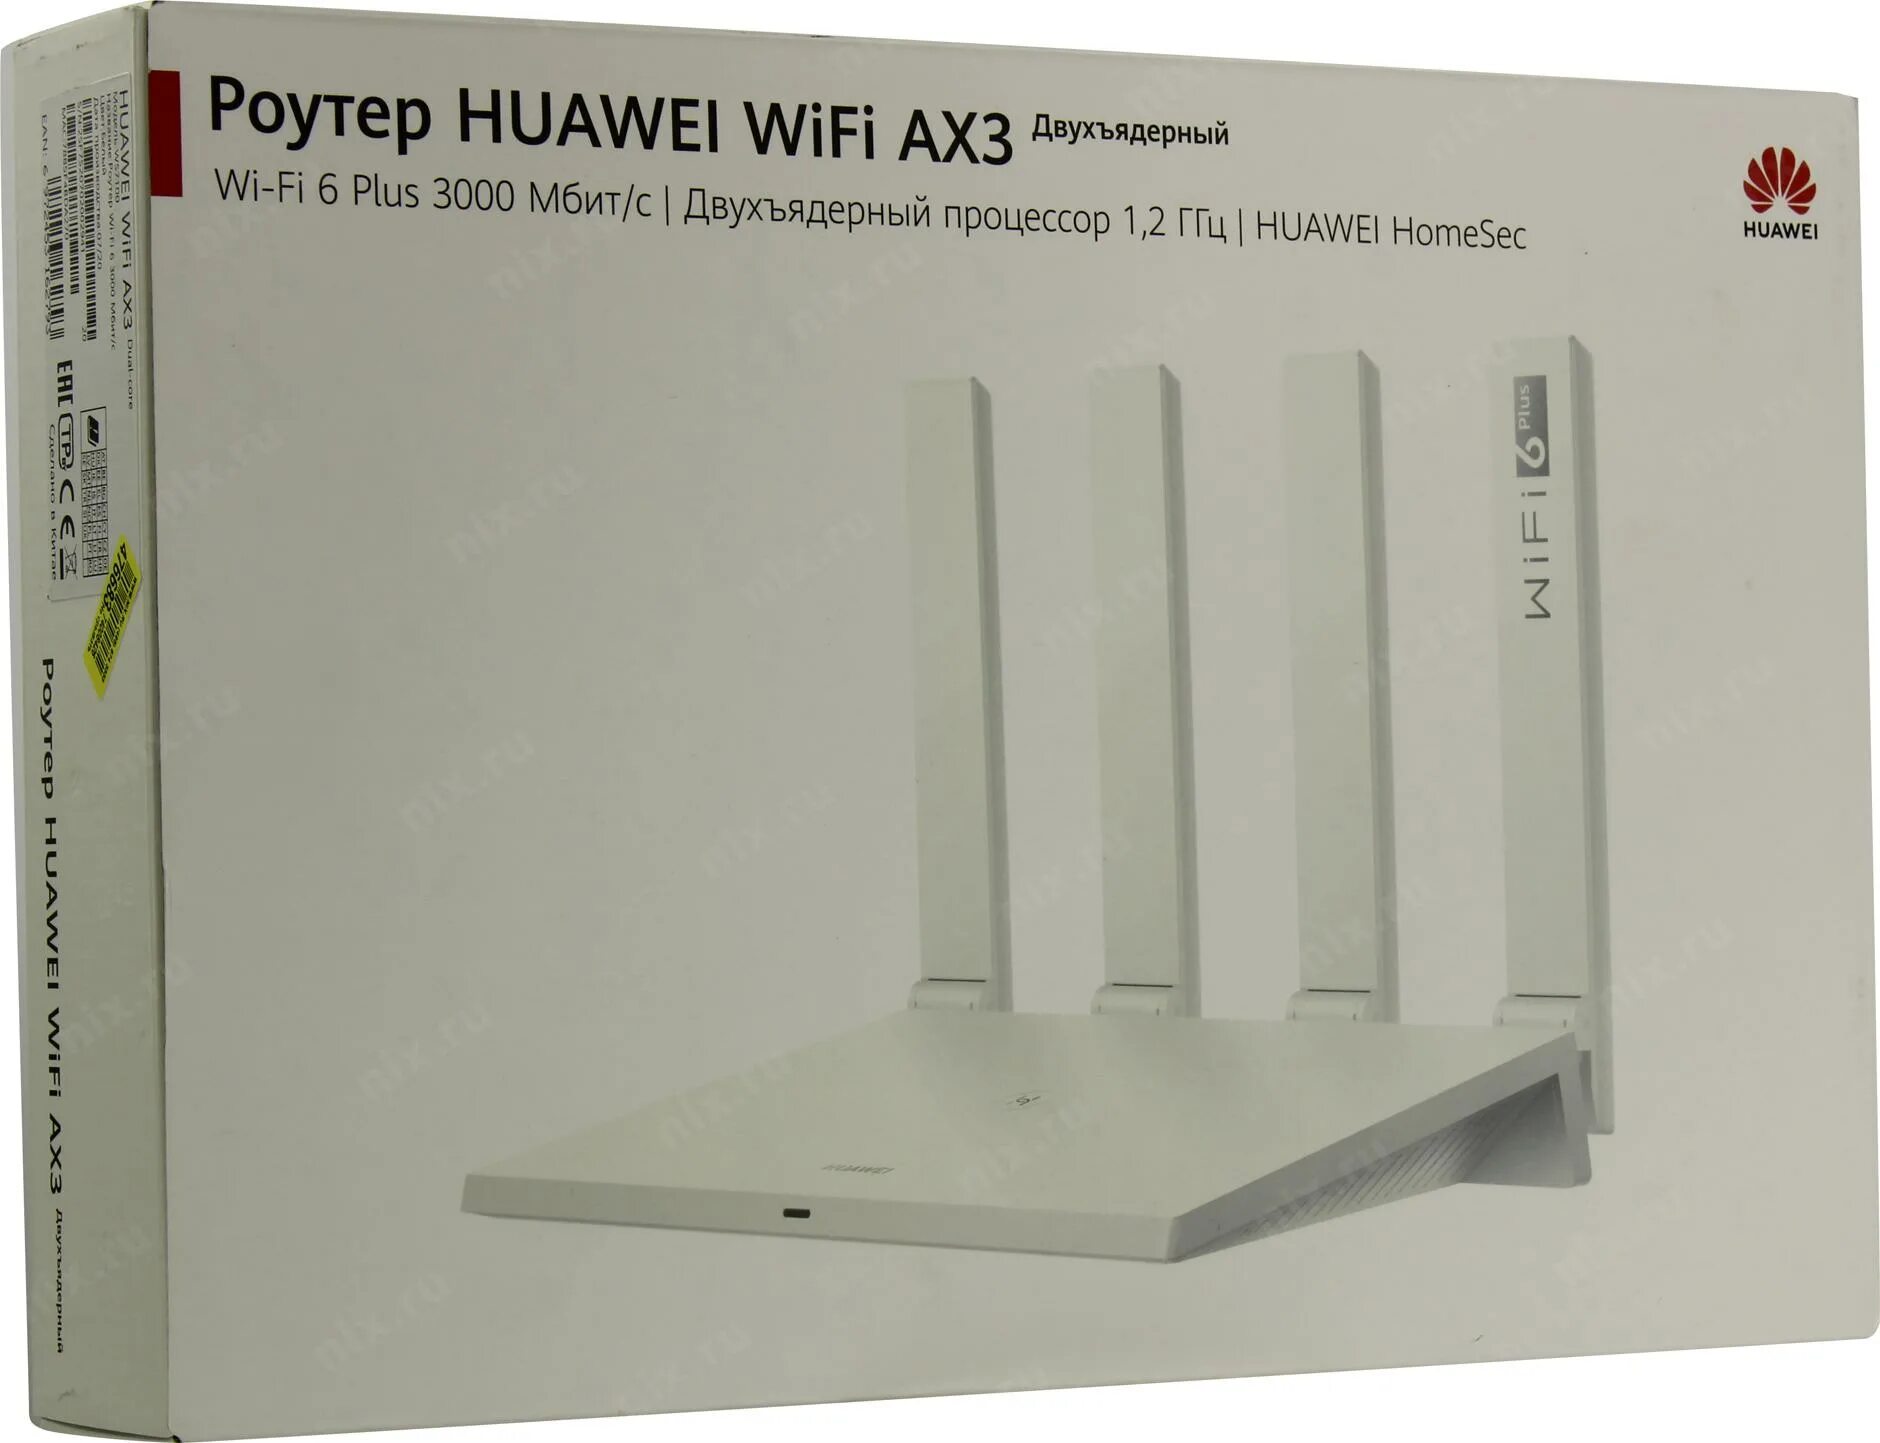 Wi-Fi роутер Huawei ws7100. Роутер Huawei WIFI ax3 Dual Core. Wi-Fi роутер Huawei ax3 ws7200. Huawei WIFI ax3 Dual Core ws7100.